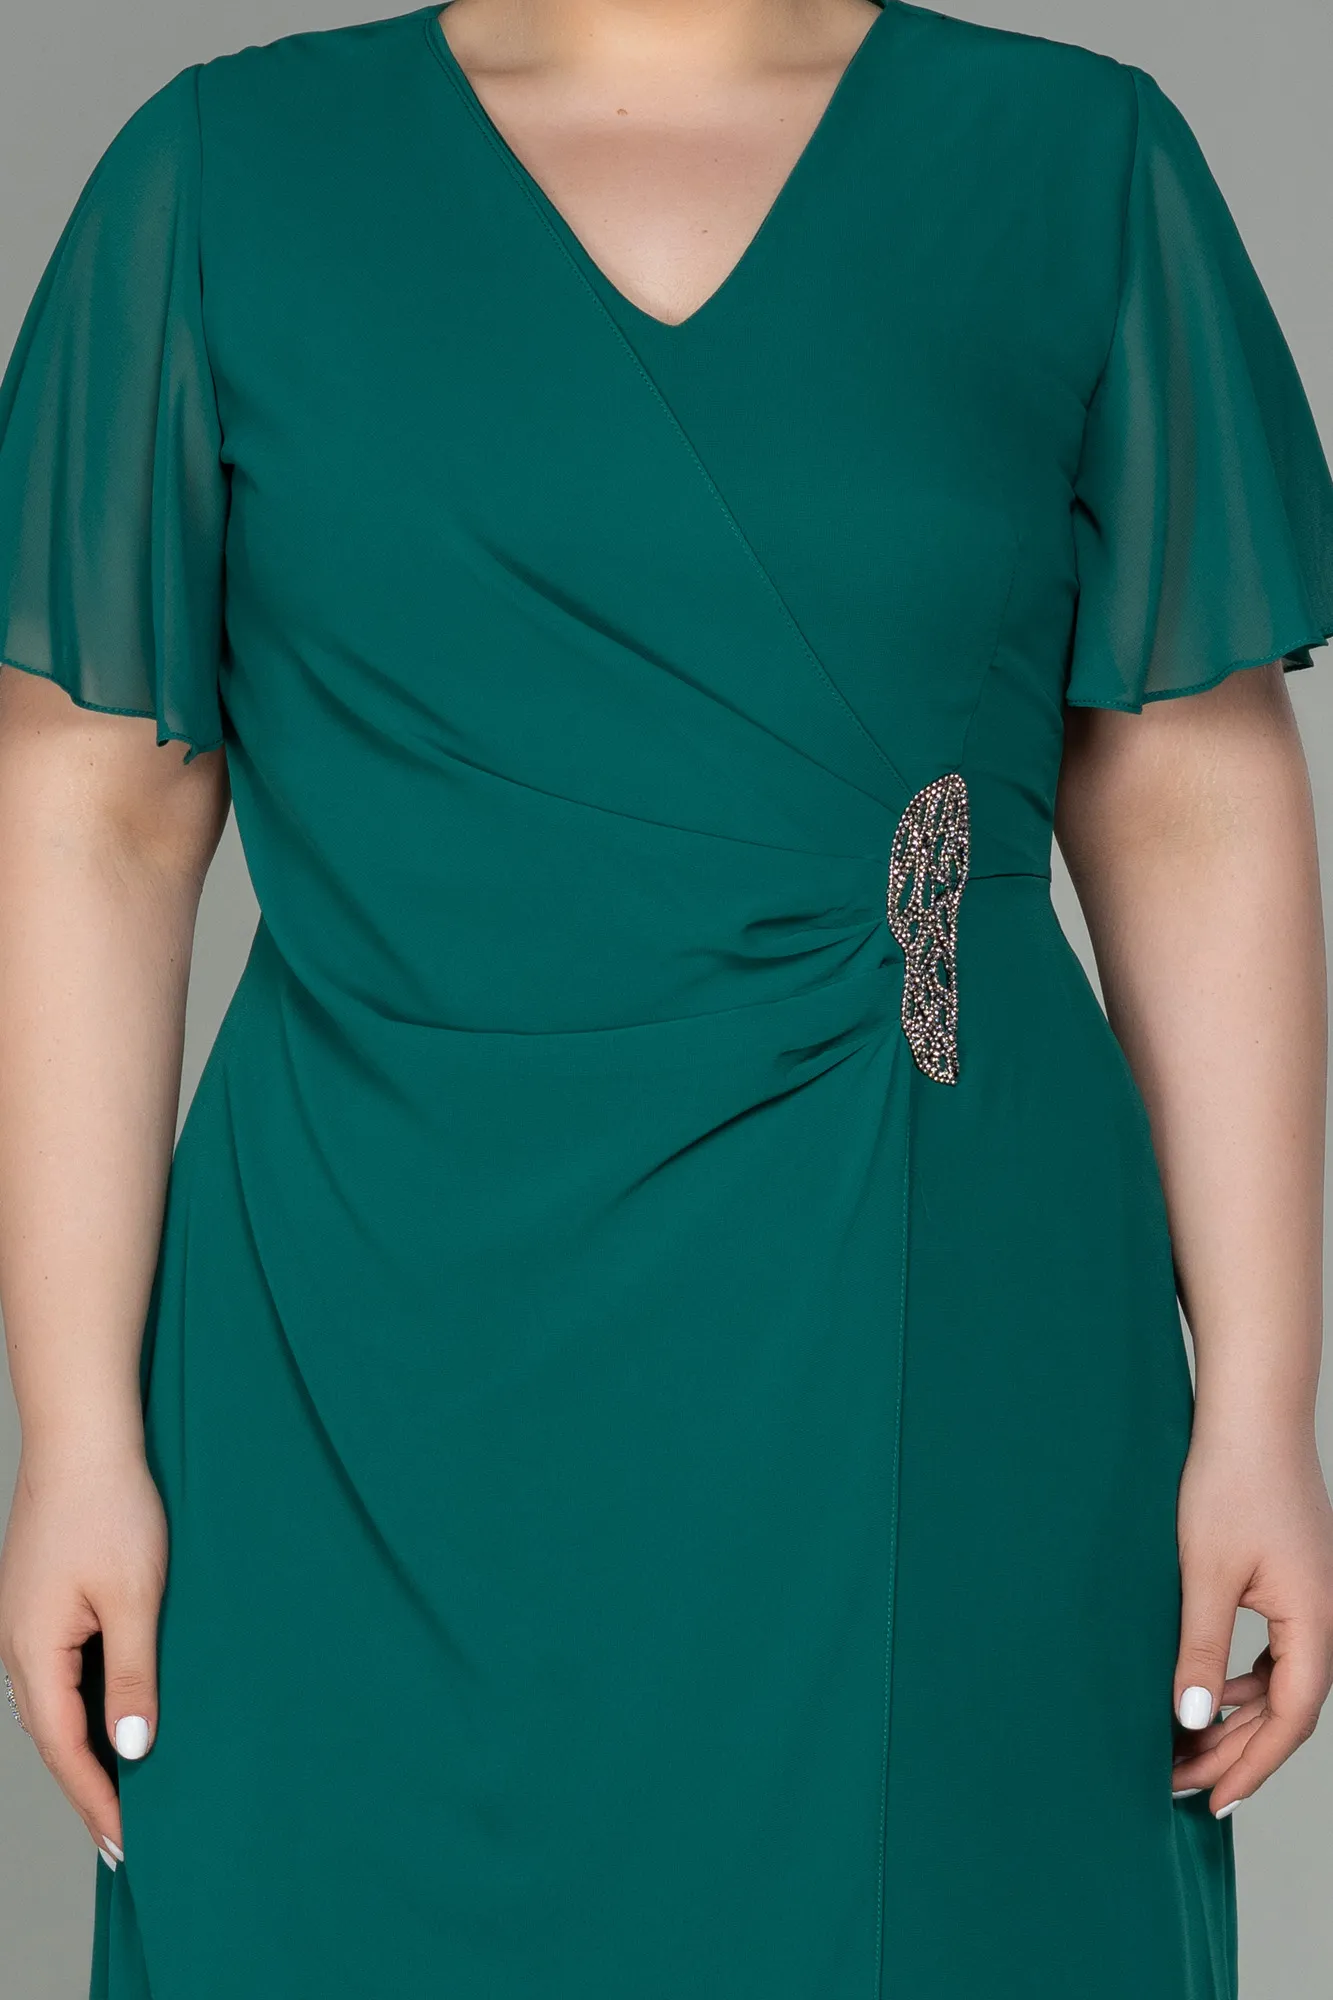 Green-Midi Chiffon Plus Size Evening Dress ABK1660